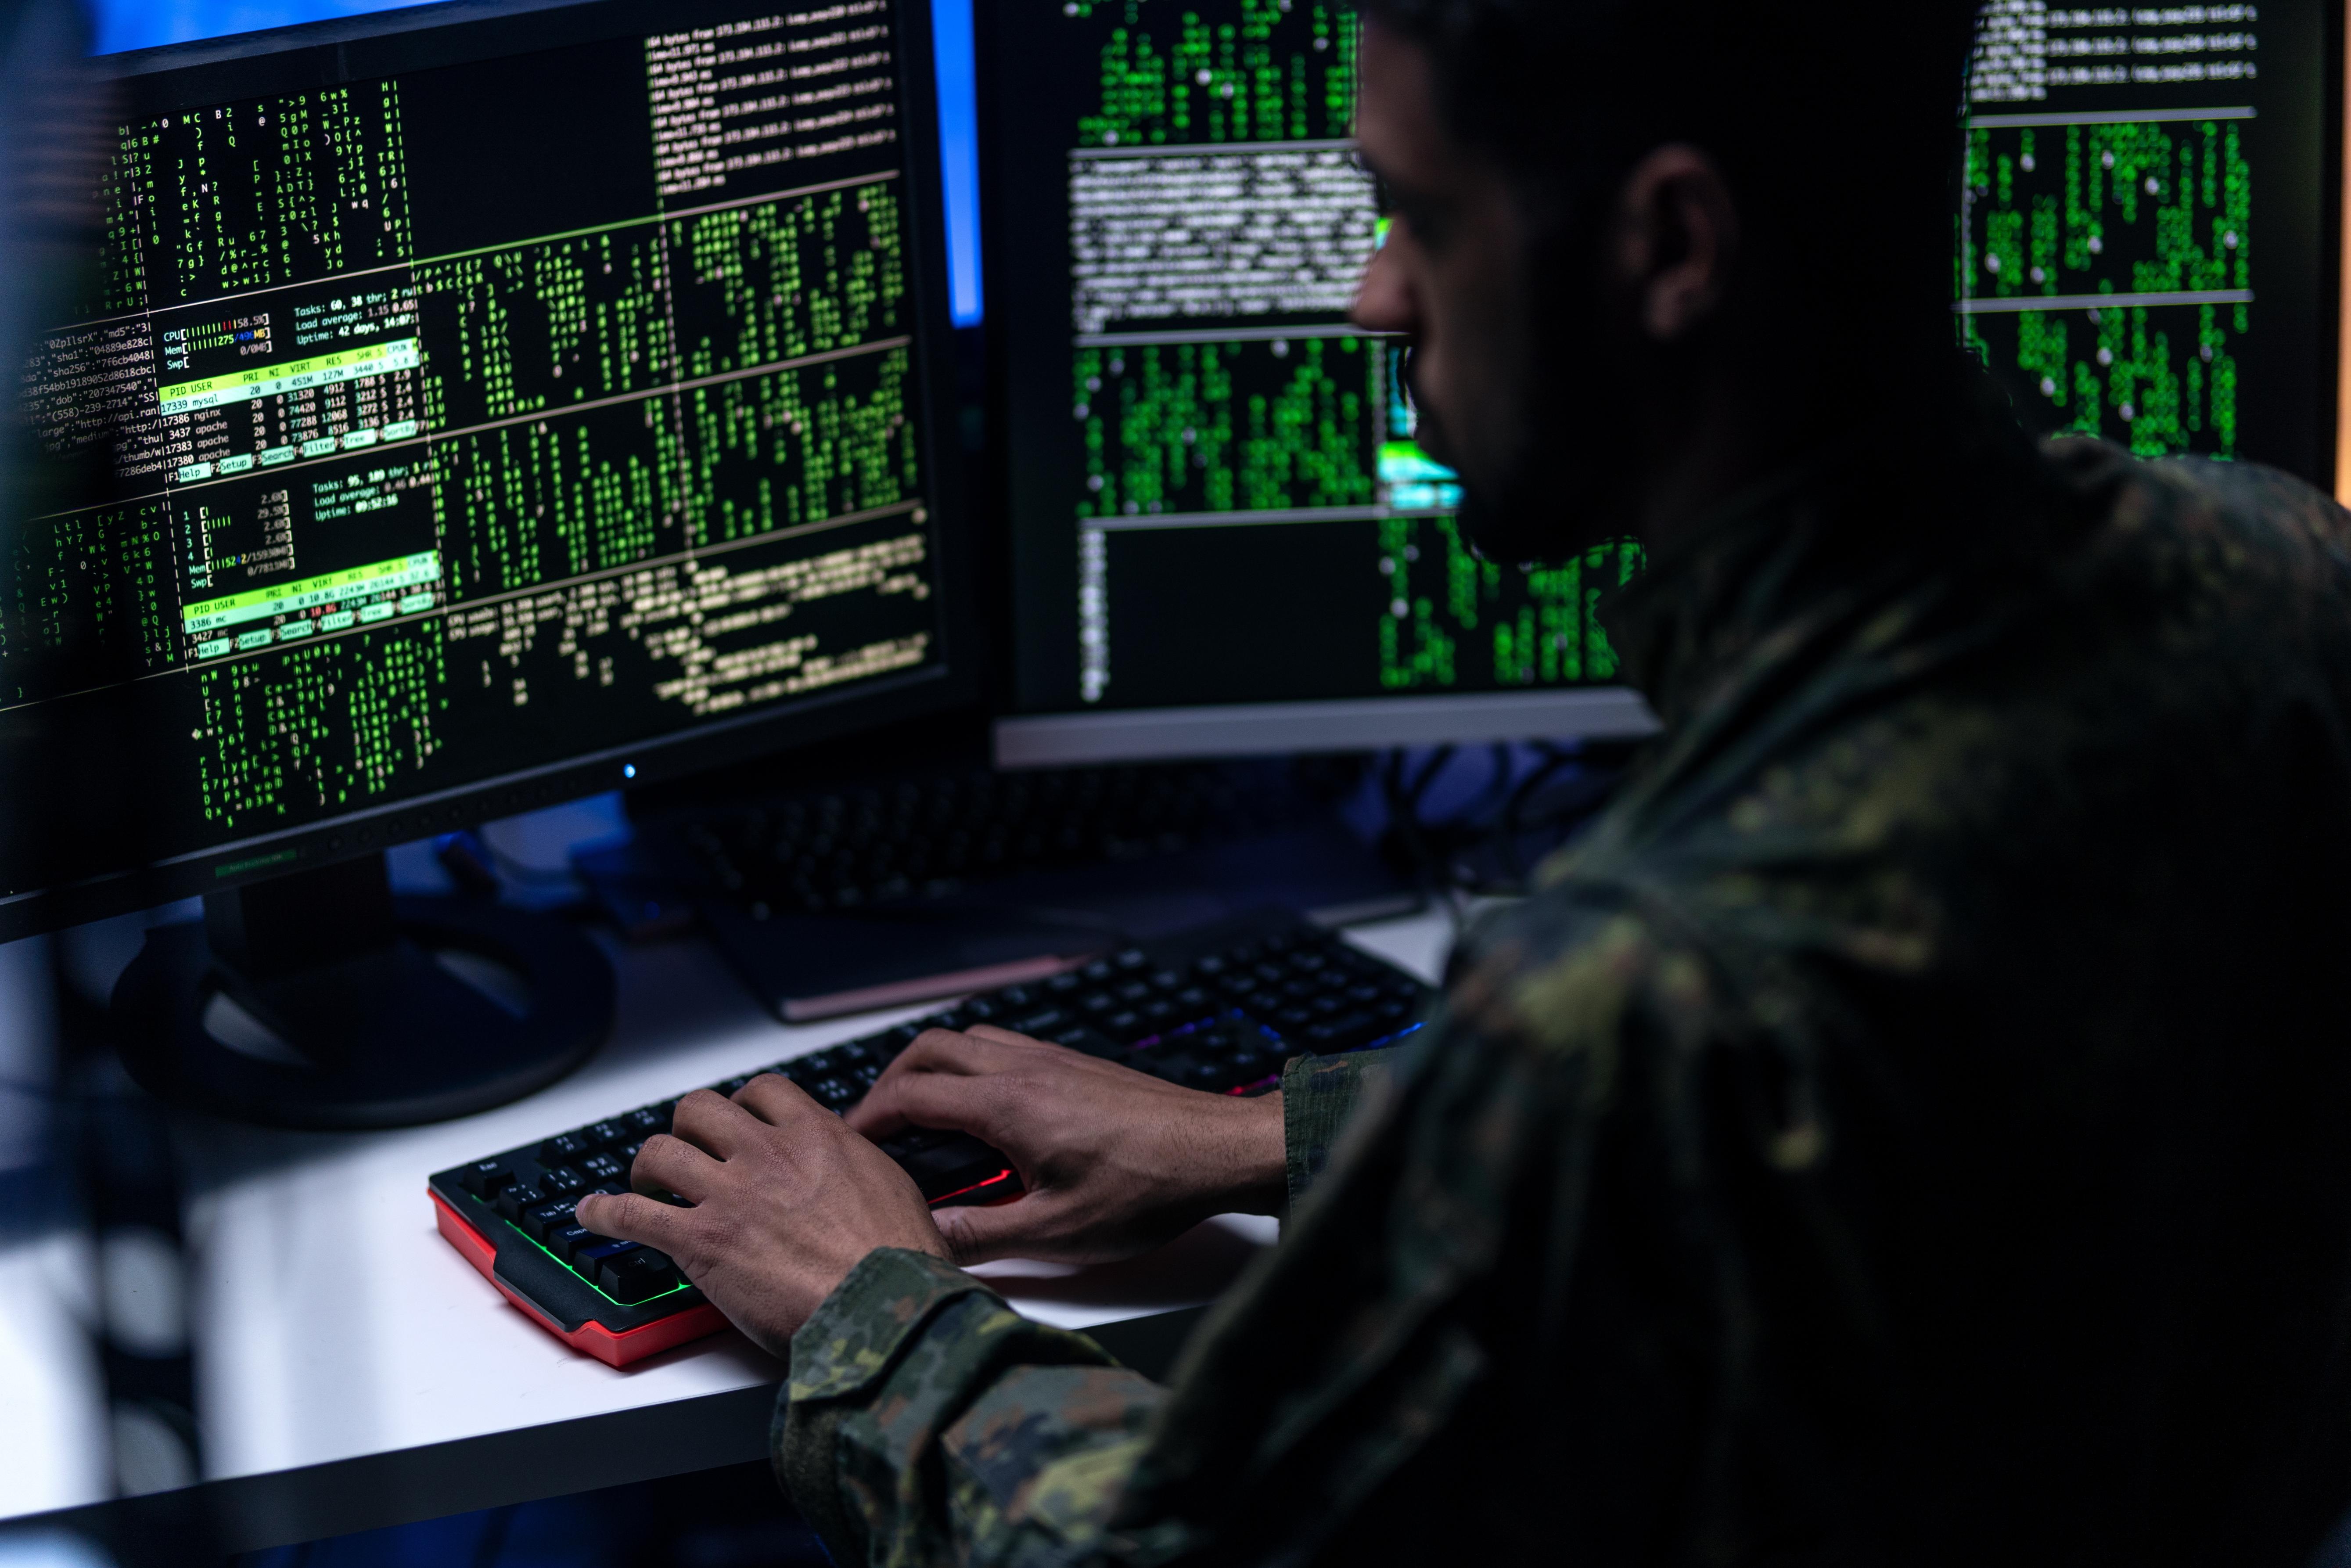 Hacker in military unifrorm on dark web, cyberwar concept.